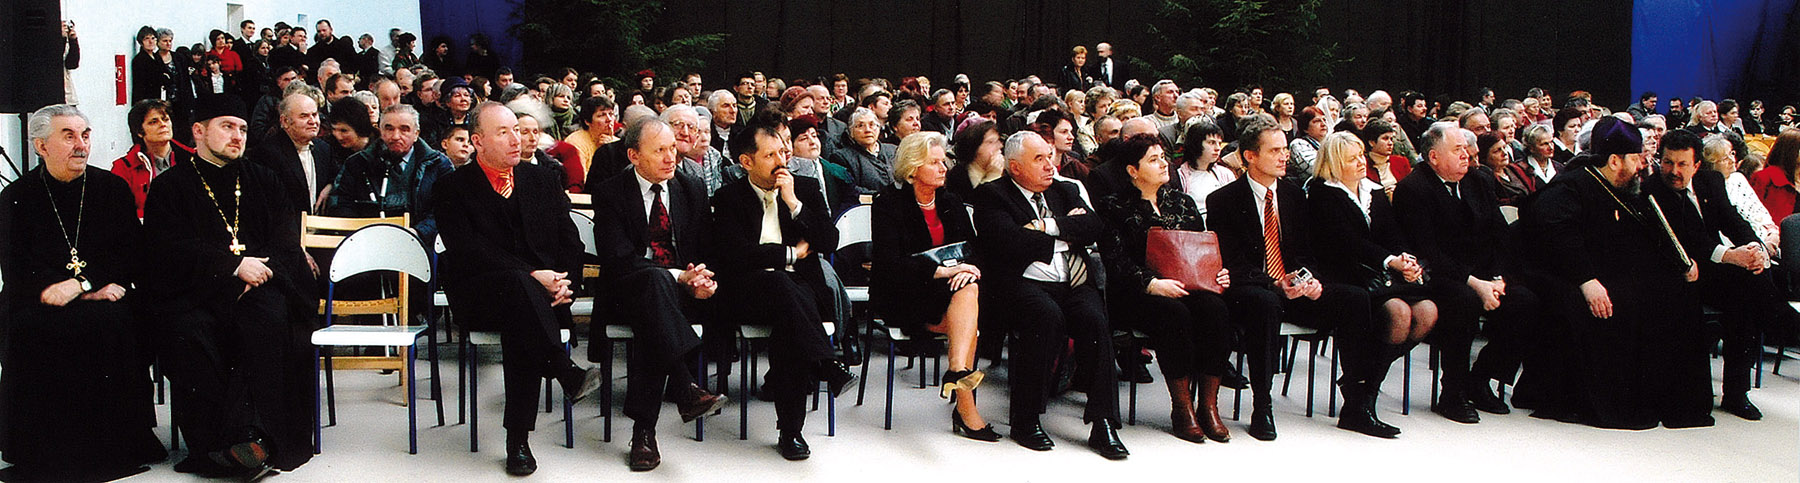 Numerous audience of XIII MFKW - Terespol 2013